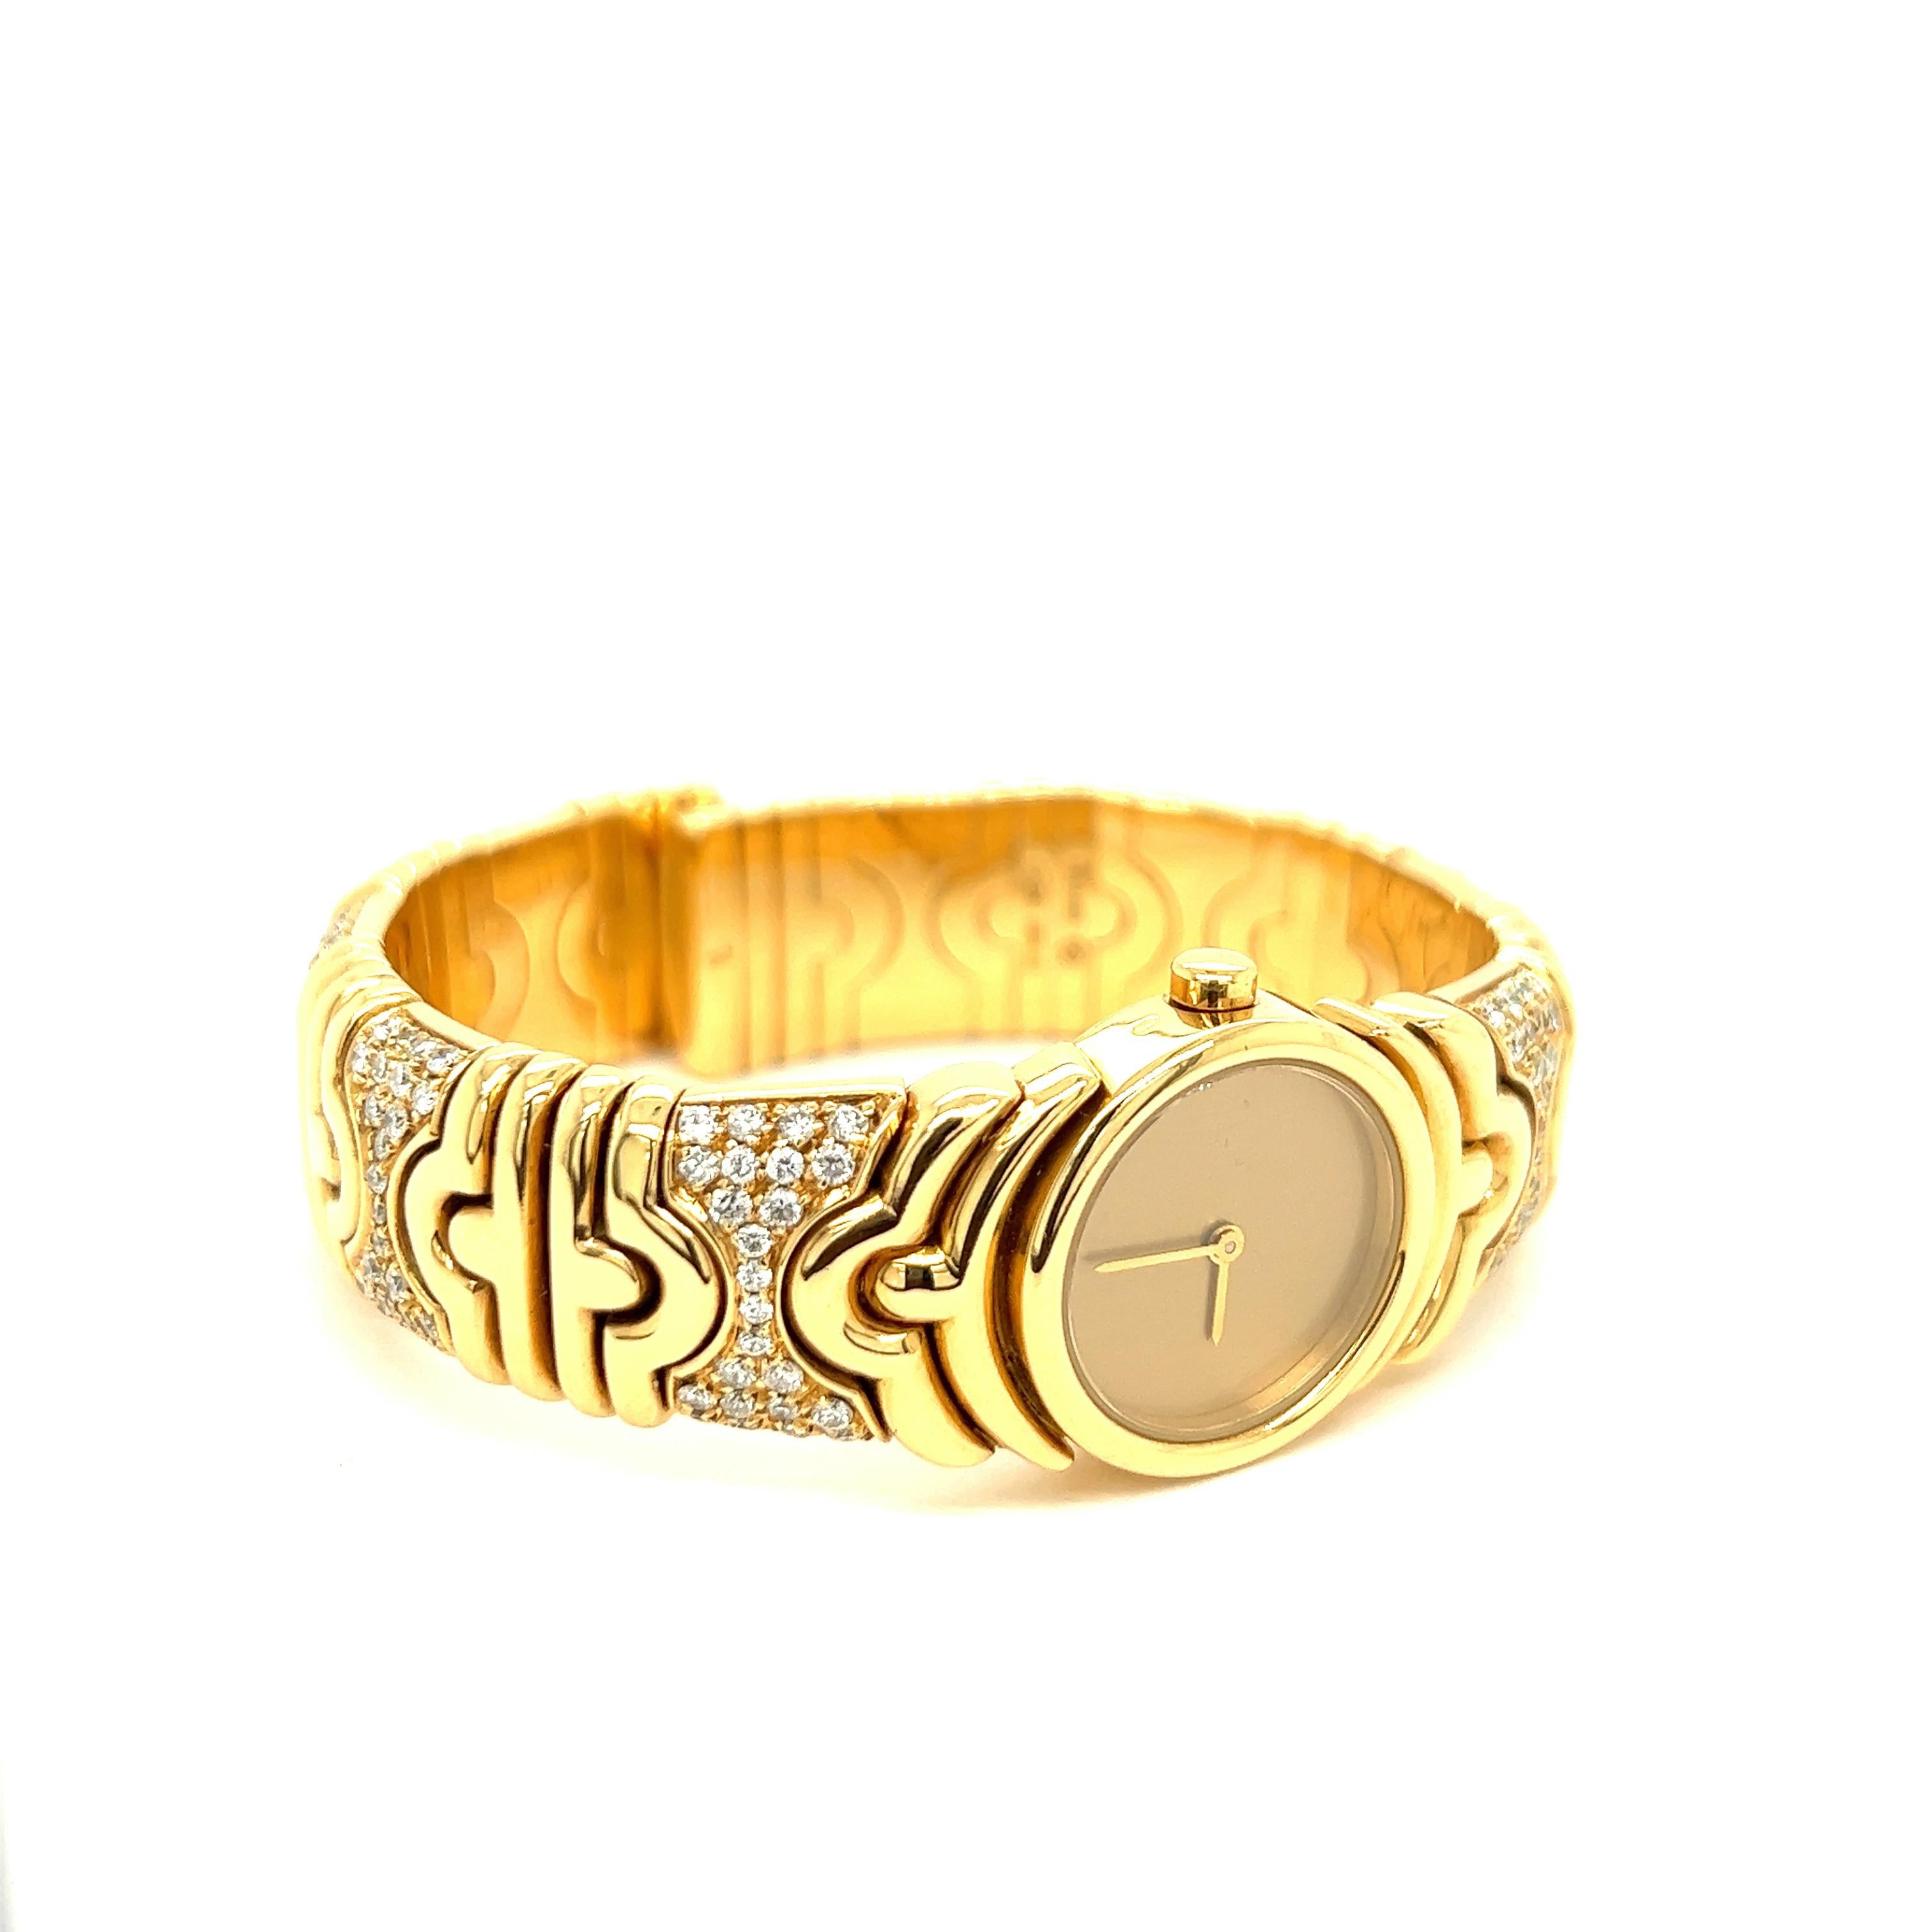 Bvlgari Parentesi Diamond 18k Yellow Gold Cuff Wristwatch

From the luxury brand's iconic Parentesi collection, this cuff wristwatch features stunning round-cut diamonds set on beautiful 18 karat yellow gold; it has a circular shaped dial and quartz